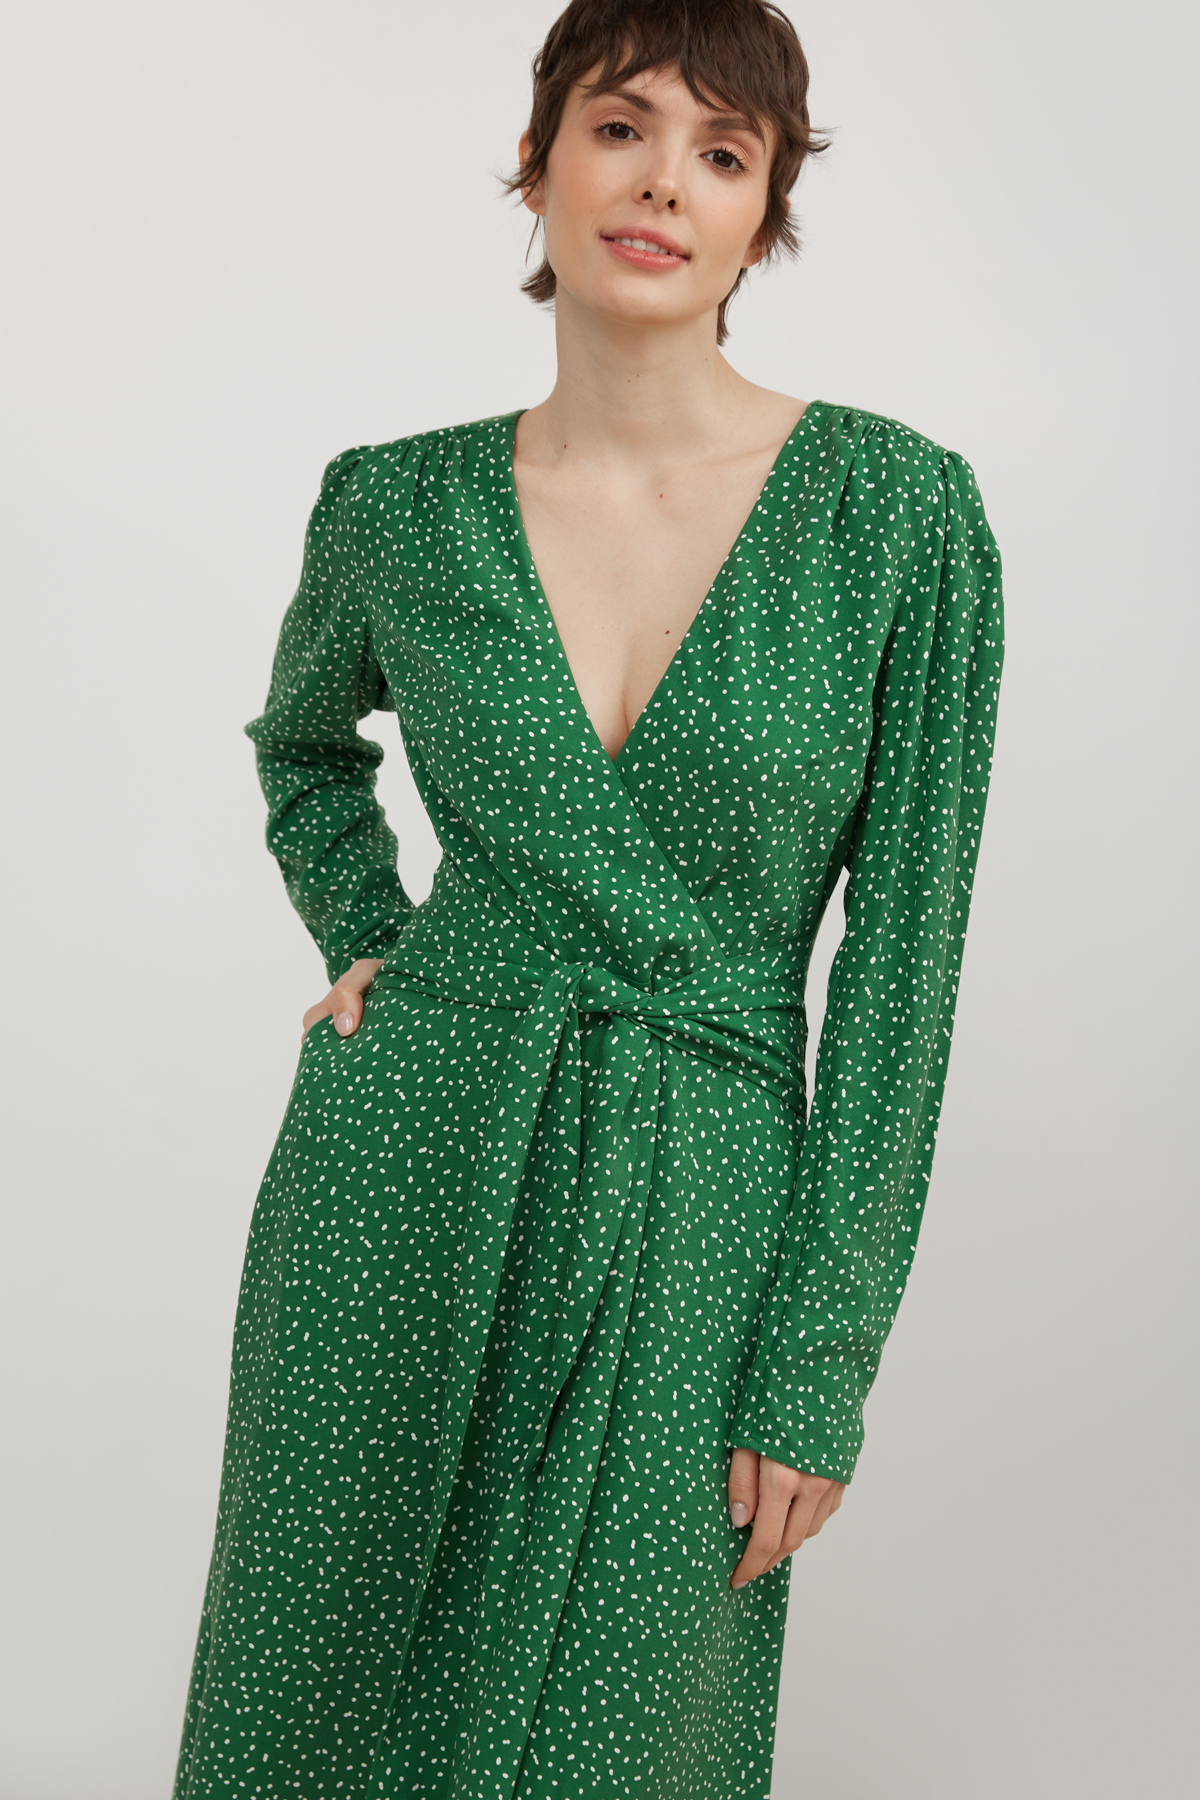 Green midi dress with viscose in white drops print, photo 2